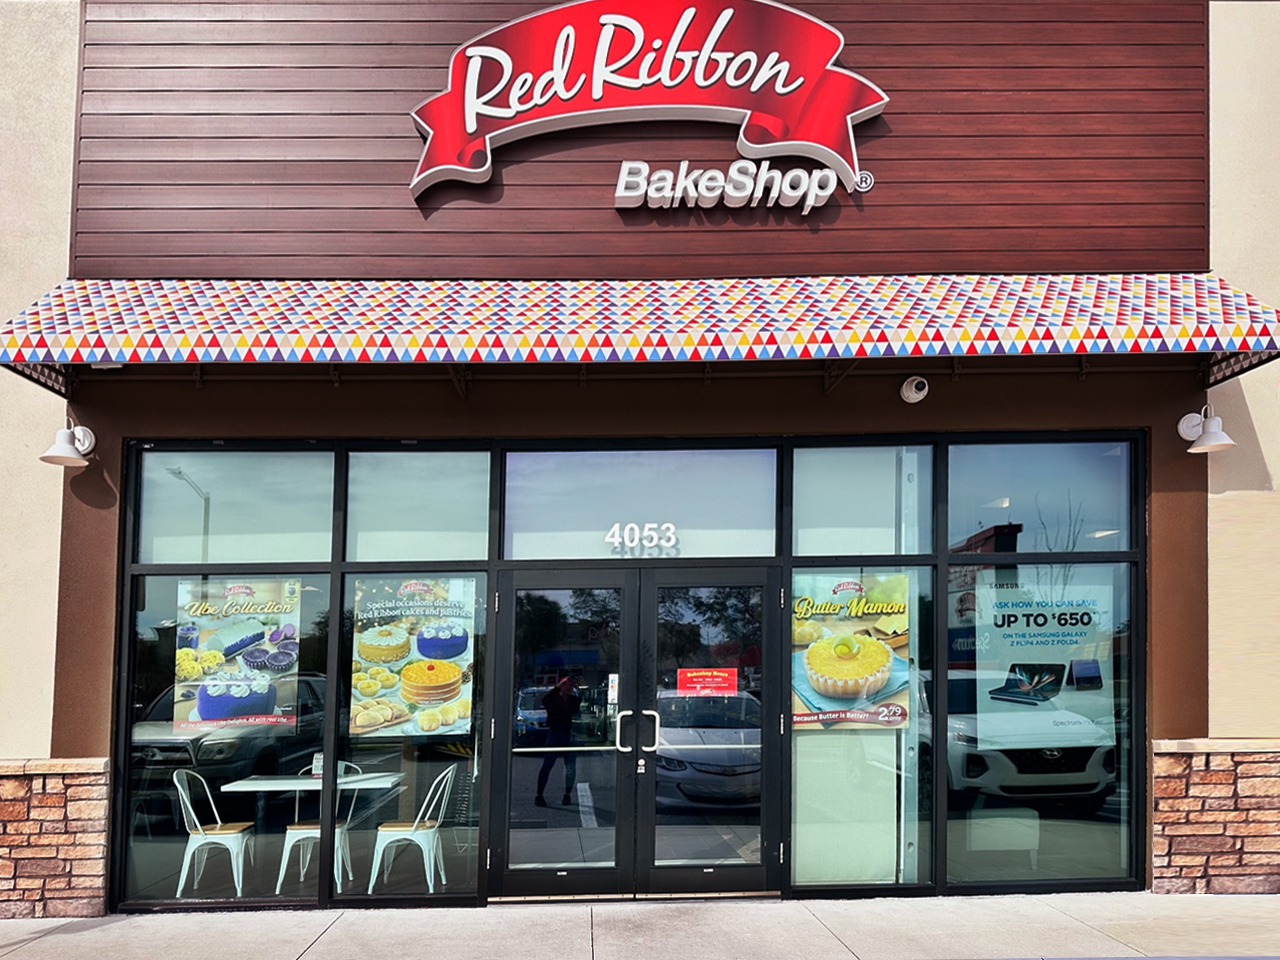 Red Ribbon Bakeshop - Cakes & Pastries - 4053 Park Blvd